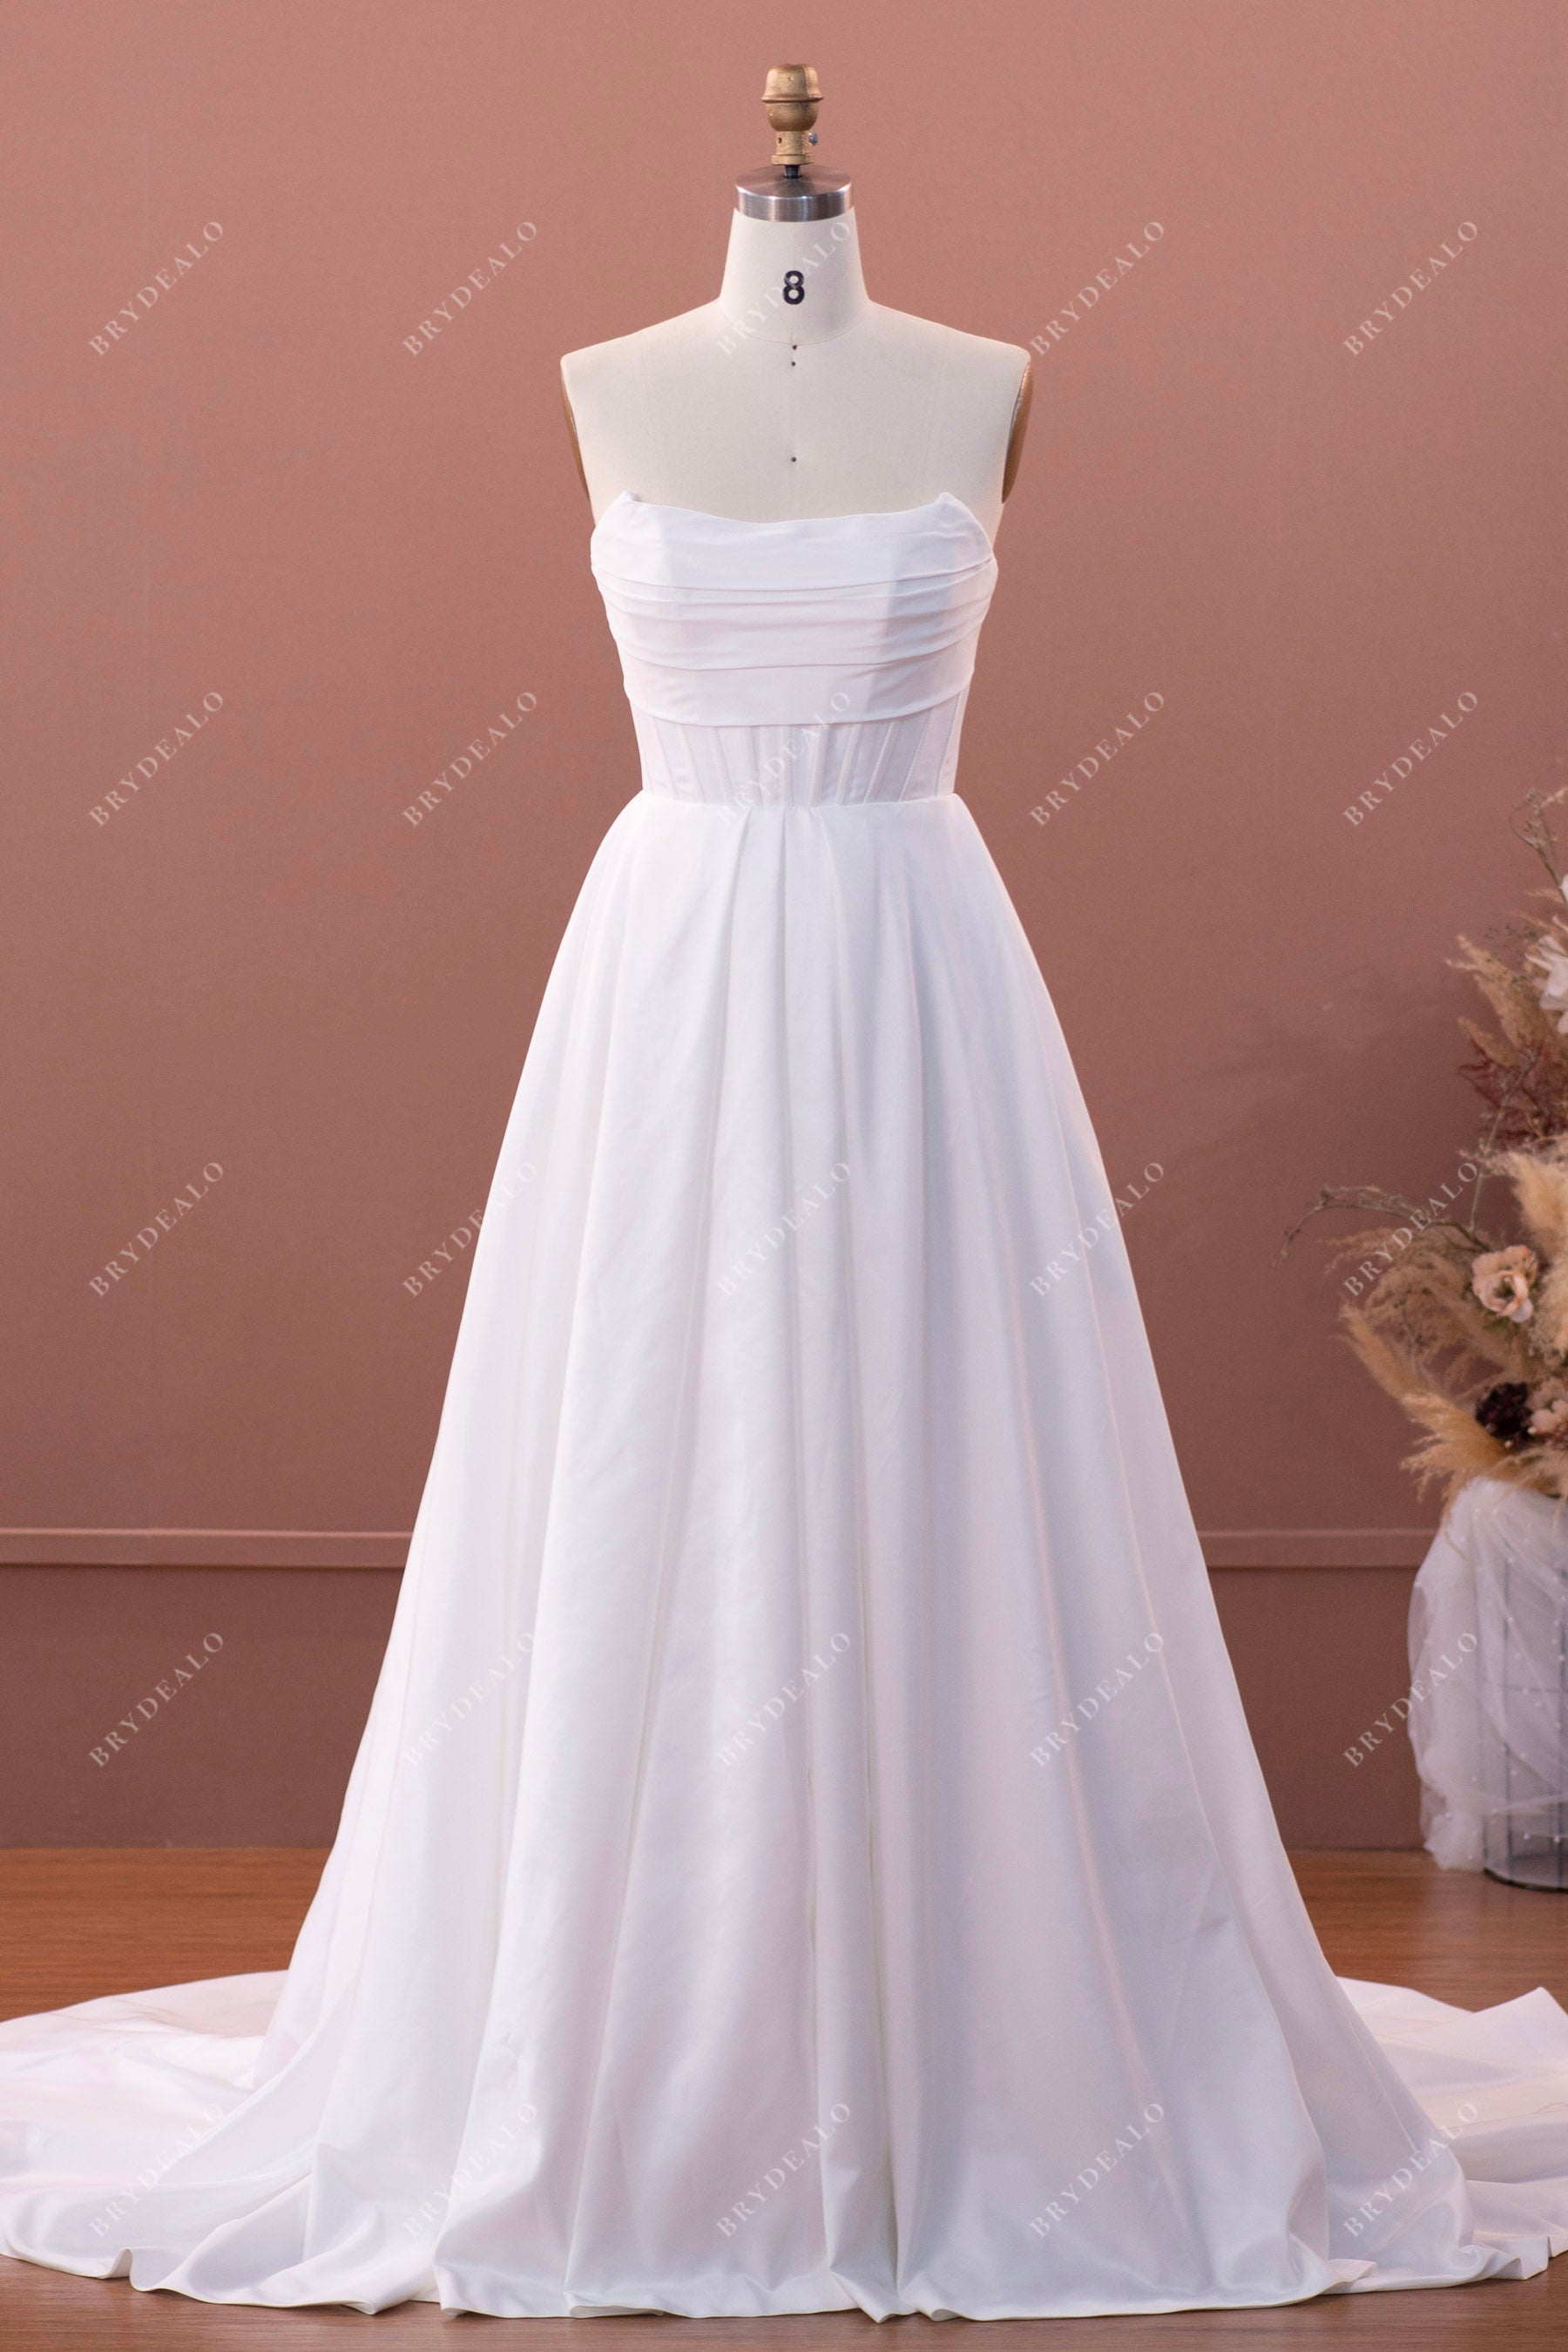 Designer Taffeta Ruched Strapless Pockets A-line Wedding Dress